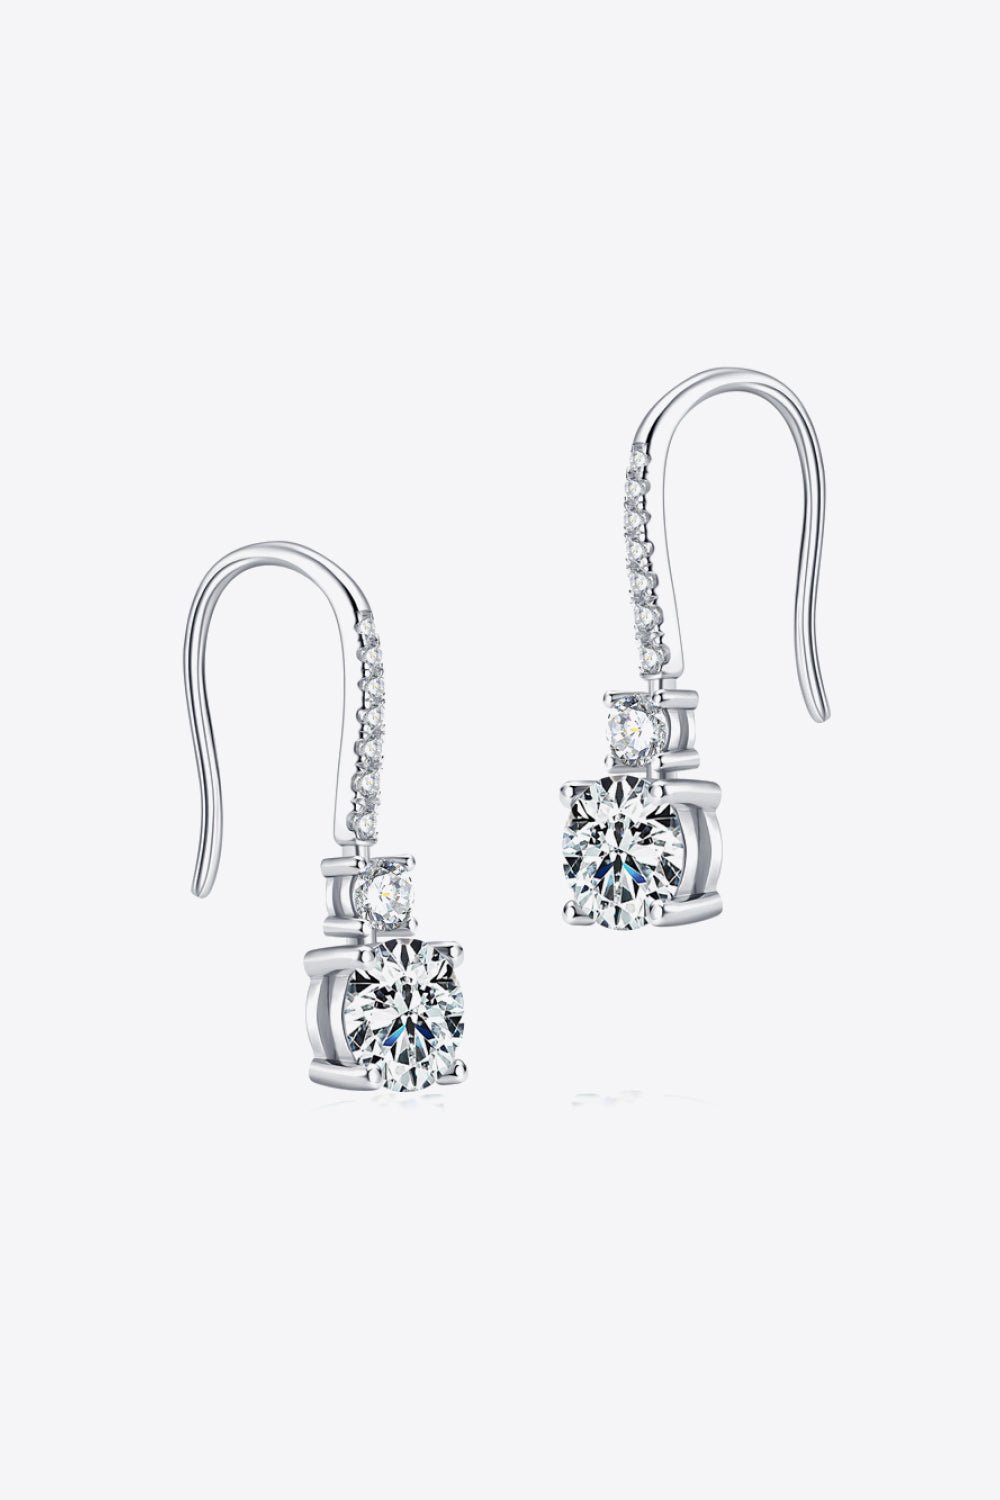 2 Carat Moissanite 925 Sterling Silver Drop Earrings - Uylee's Boutique